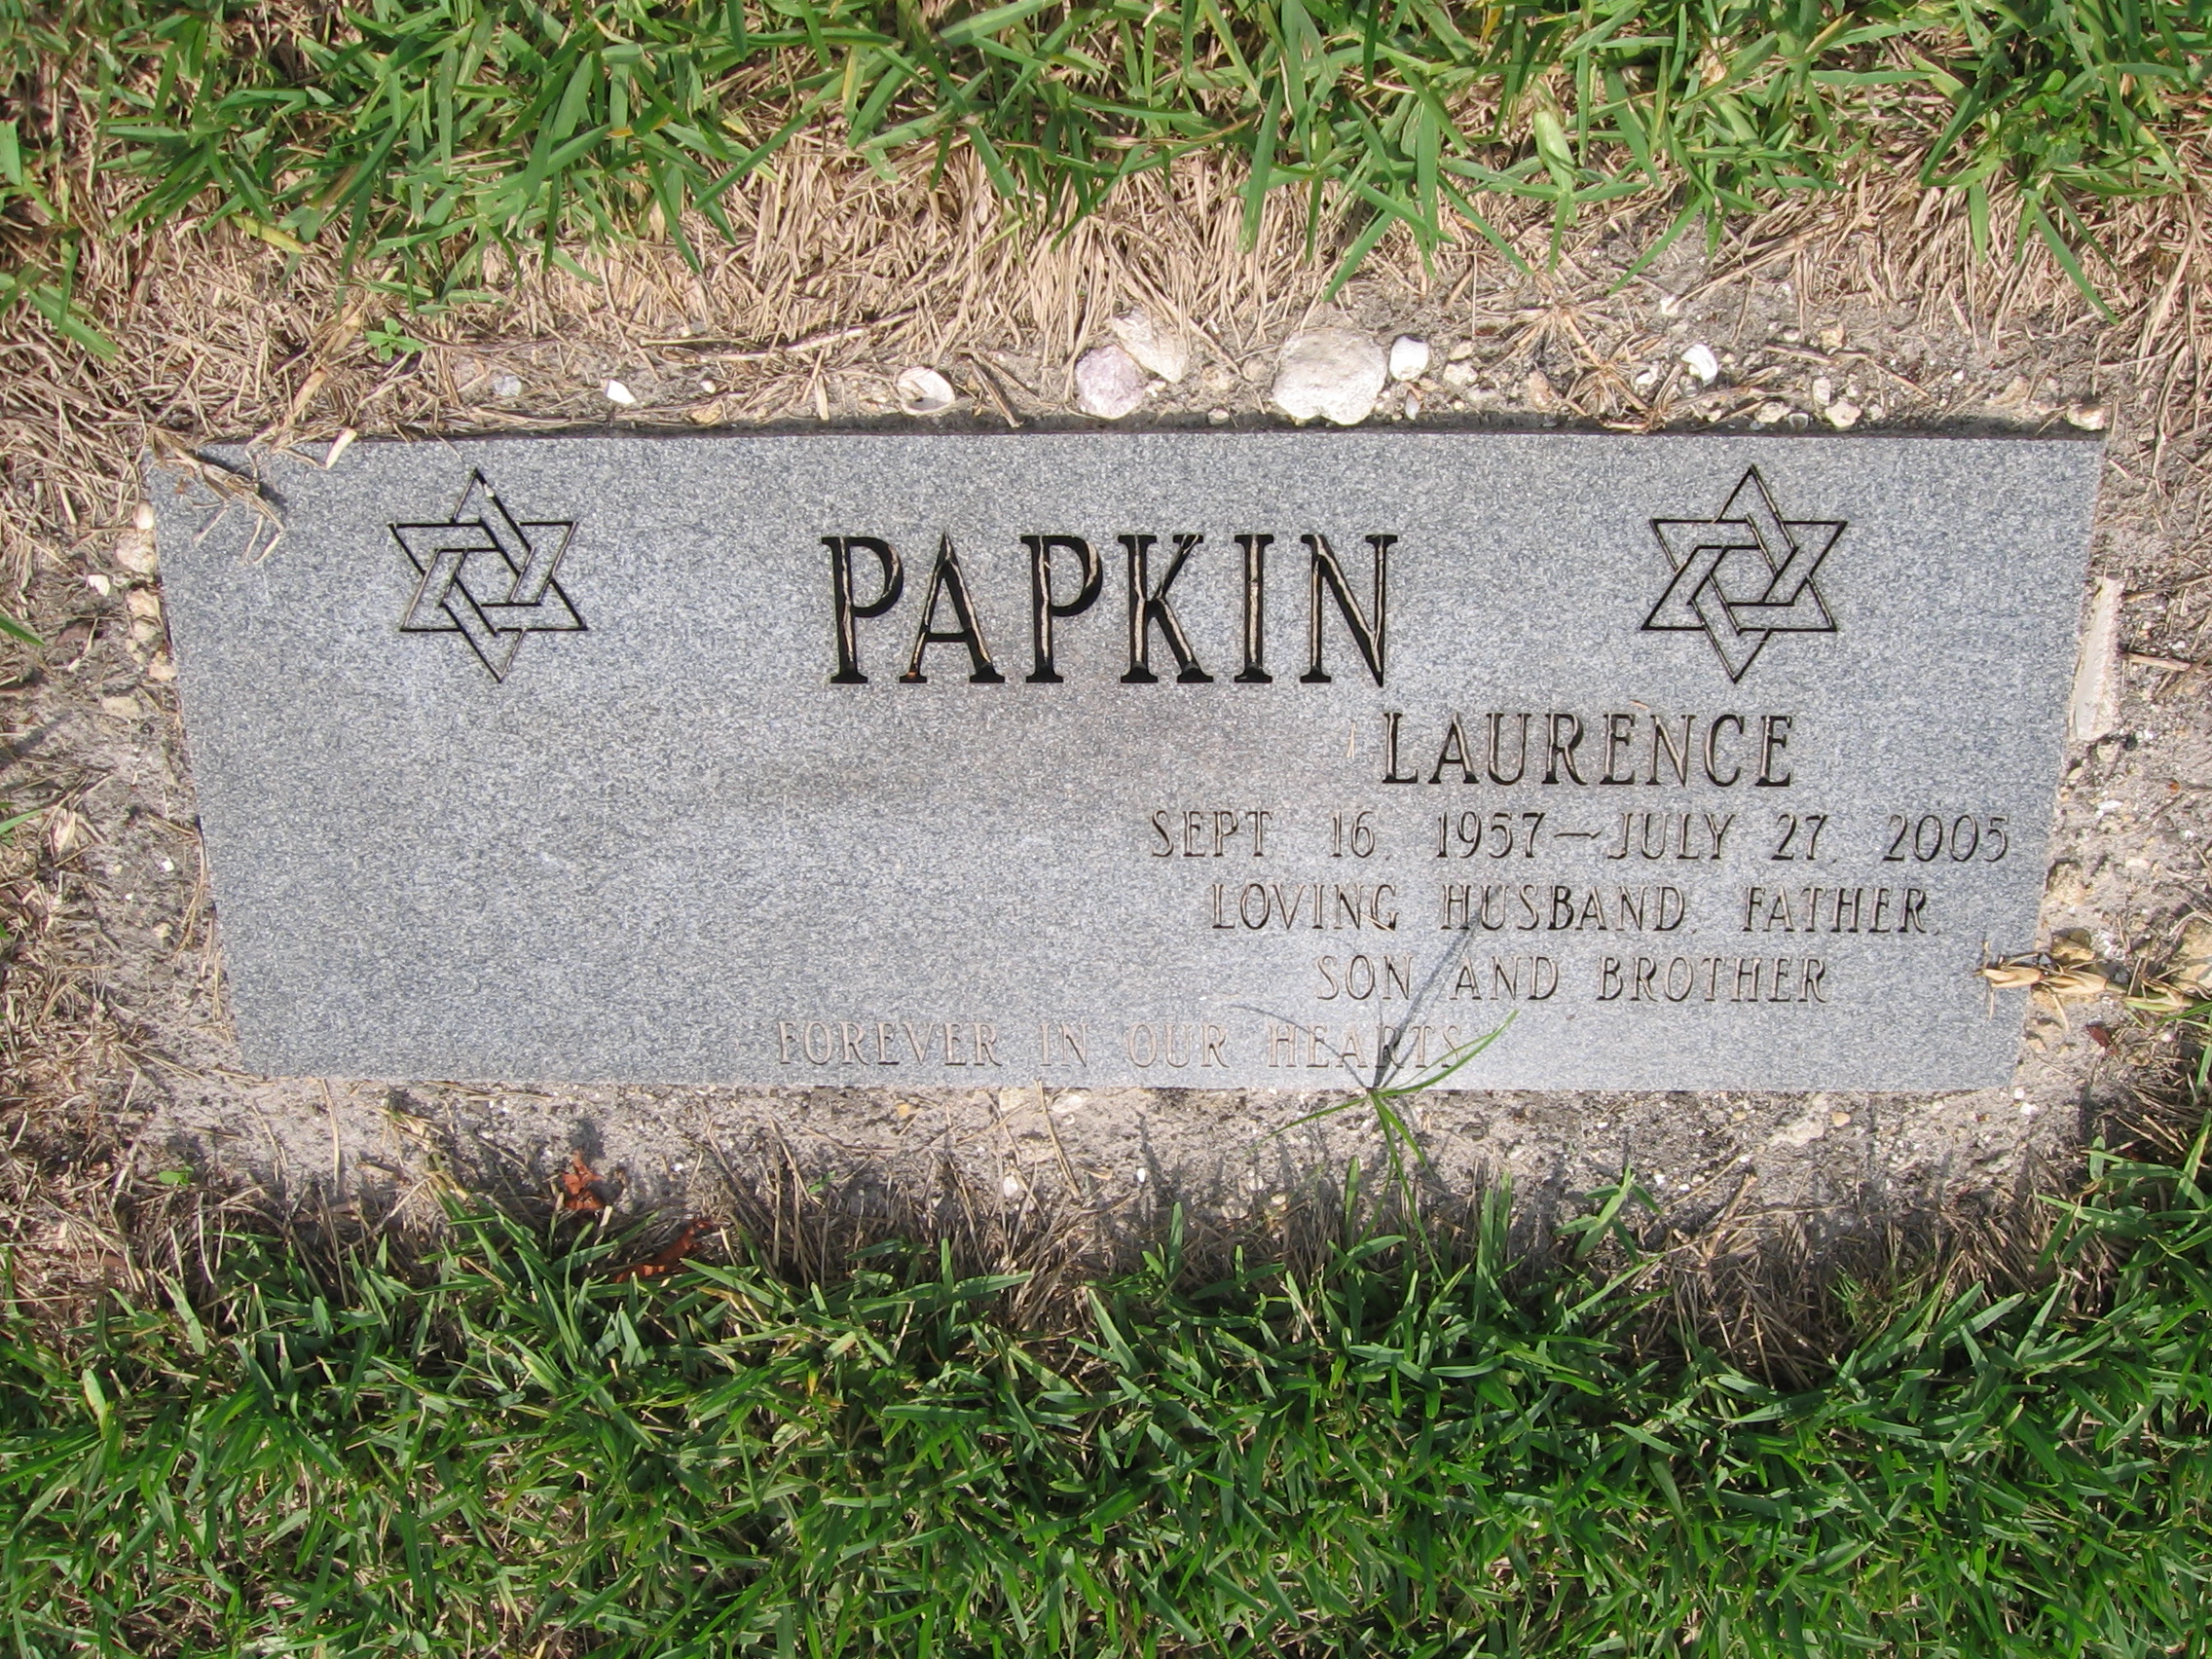 Laurence Papkin